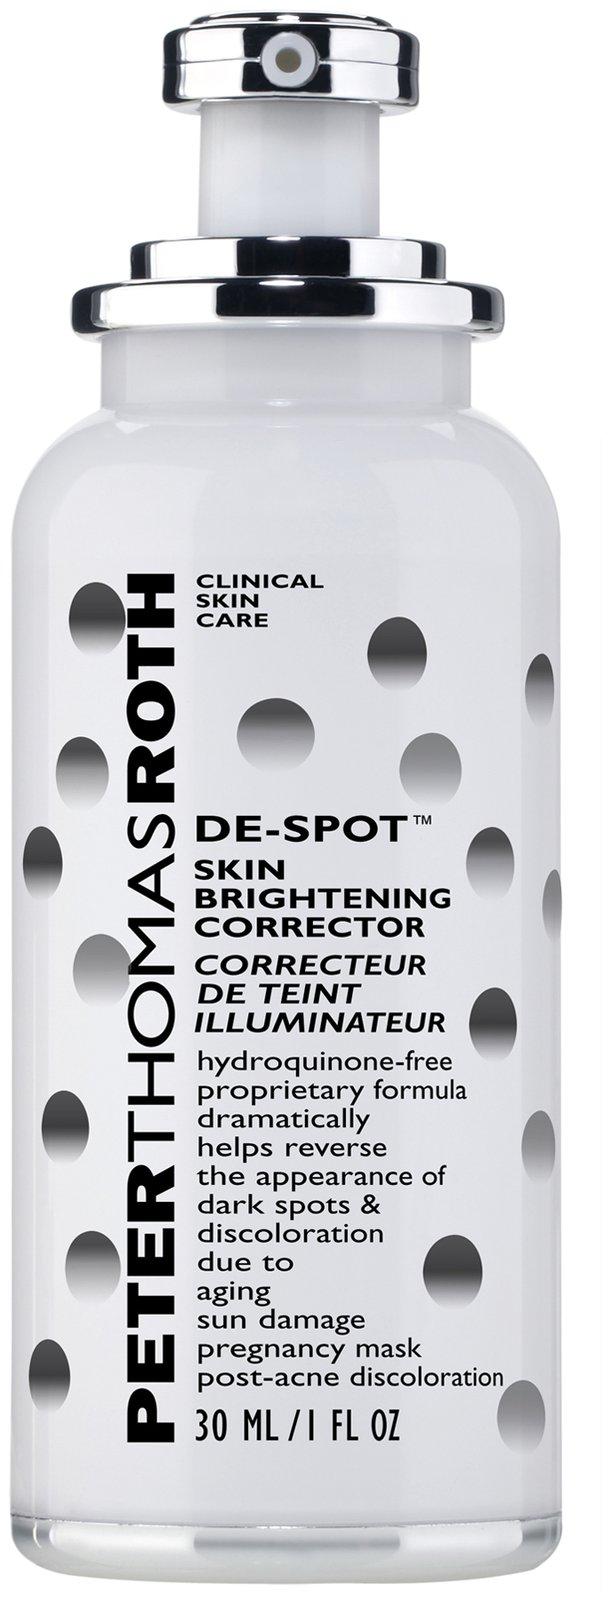 Peter Thomas Roth De-spot Skin Brightening Corrector